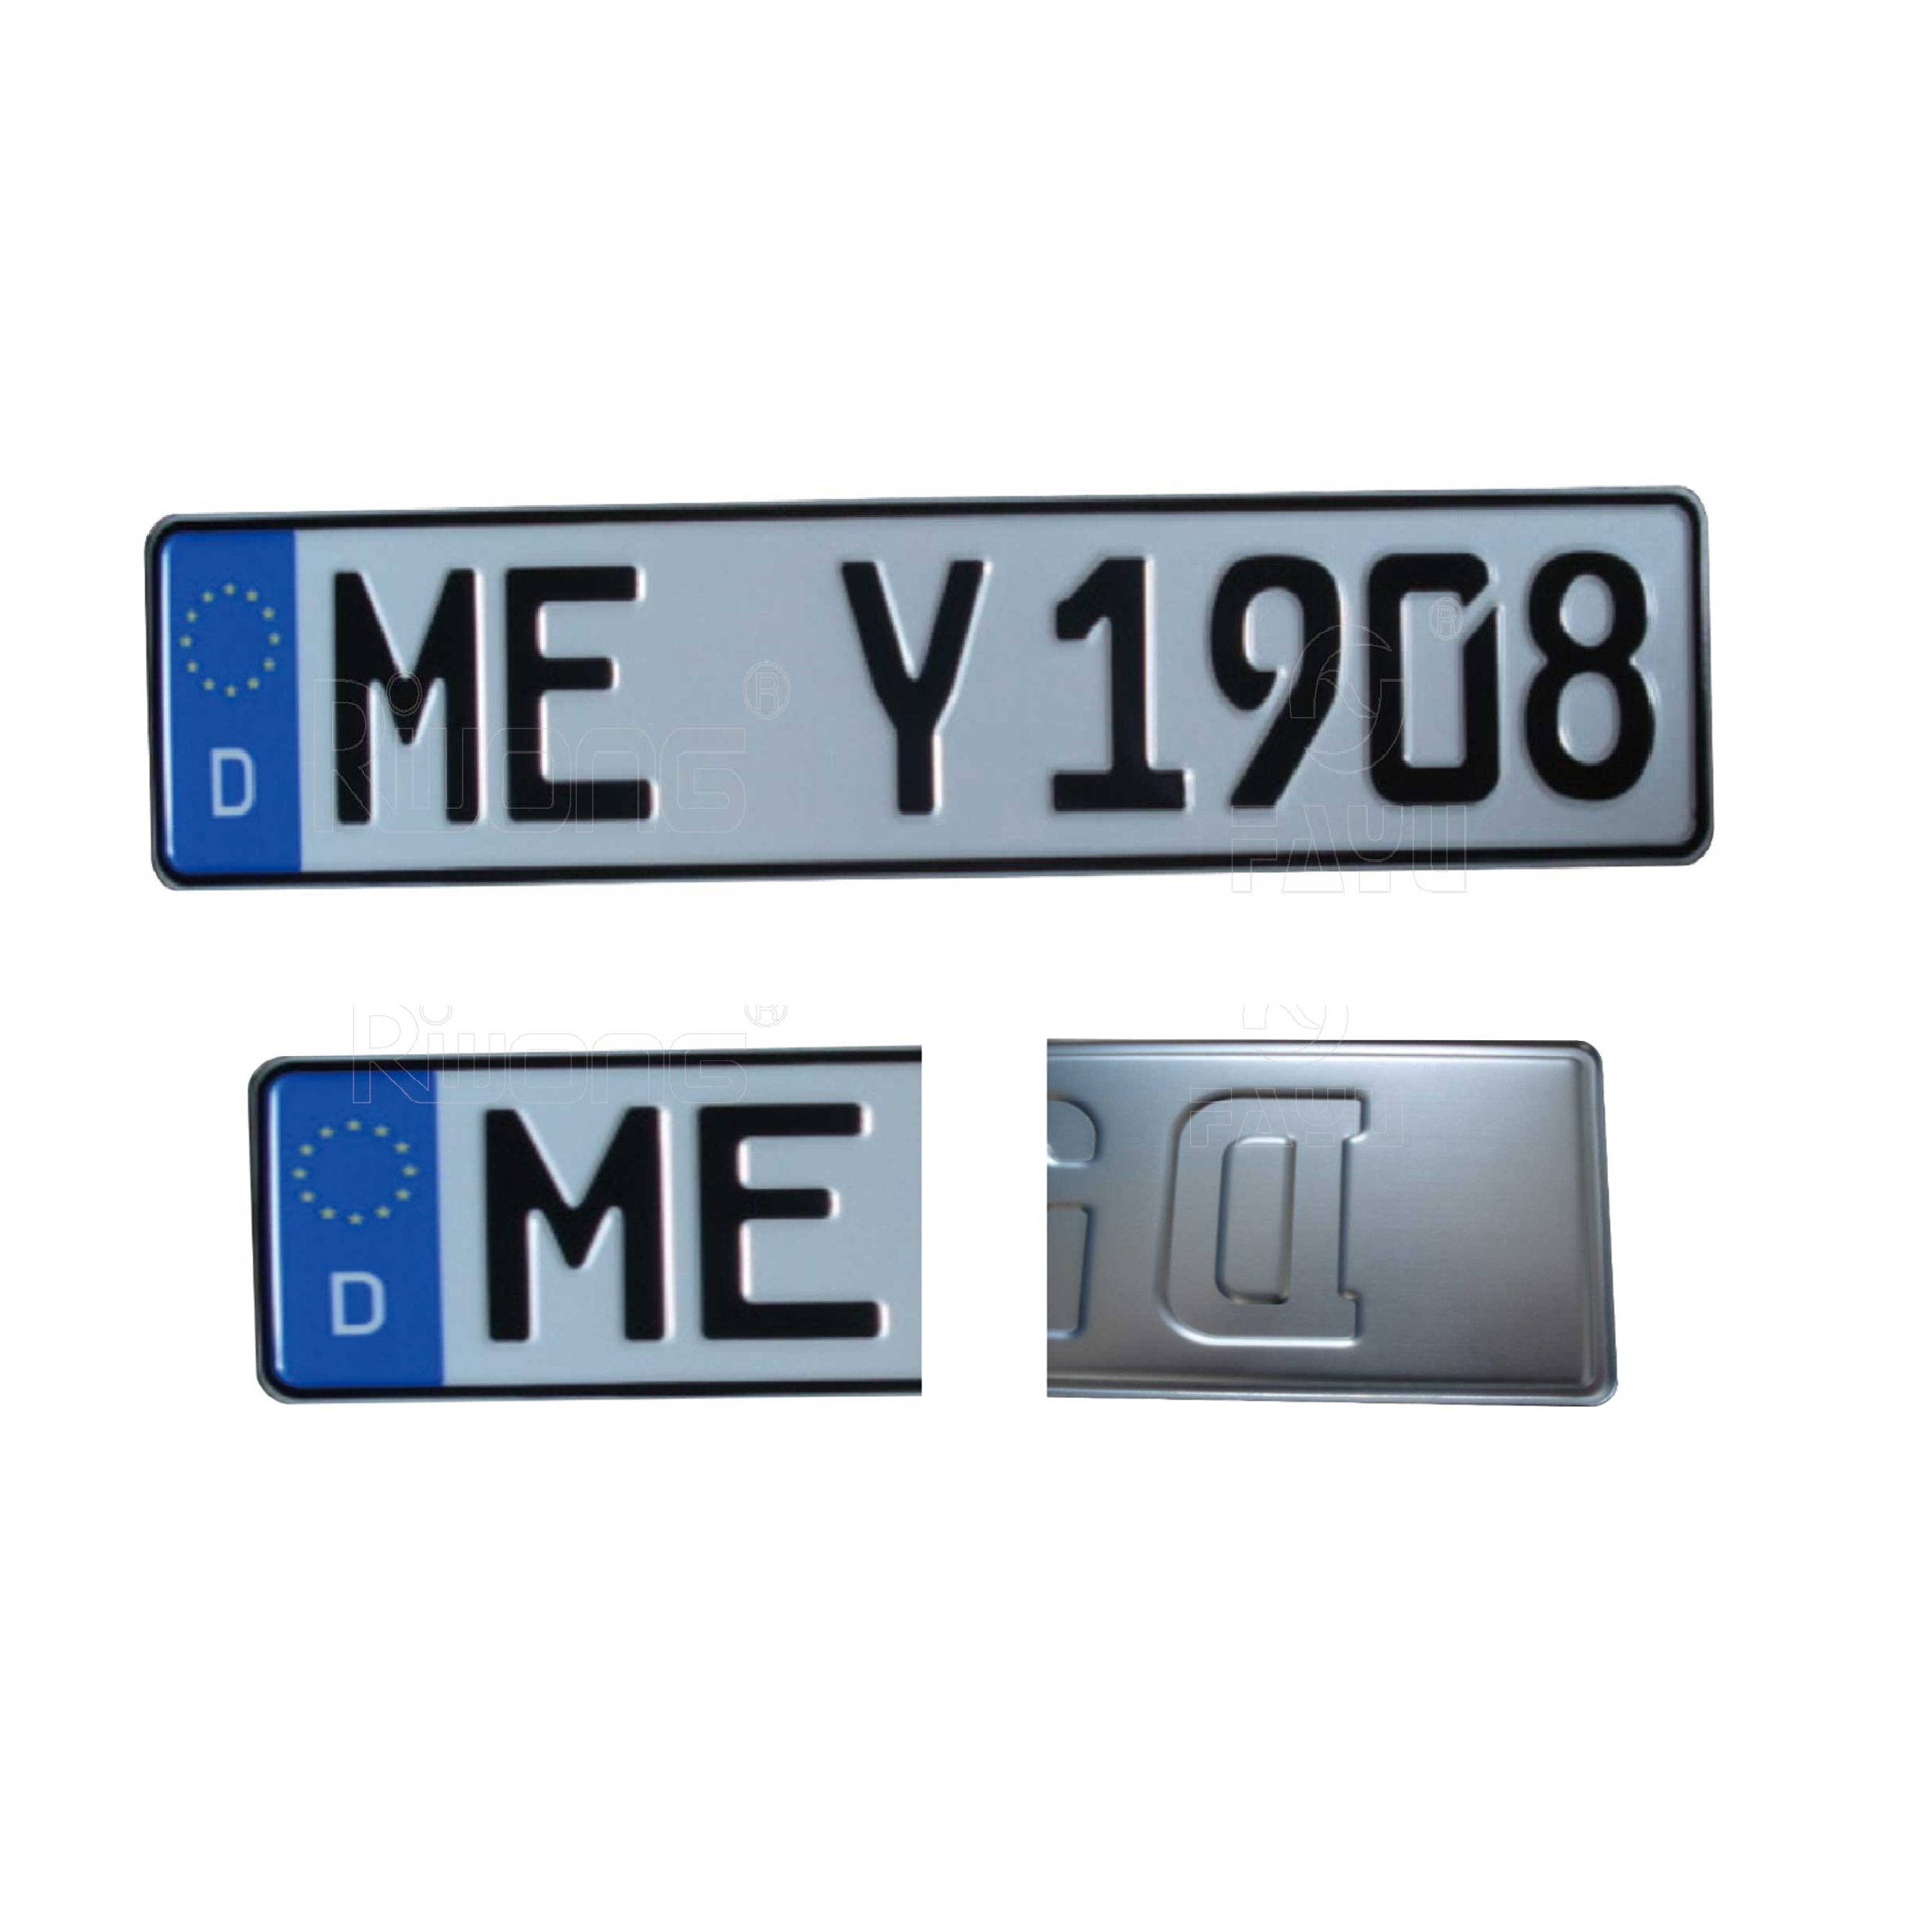 Germany license plates